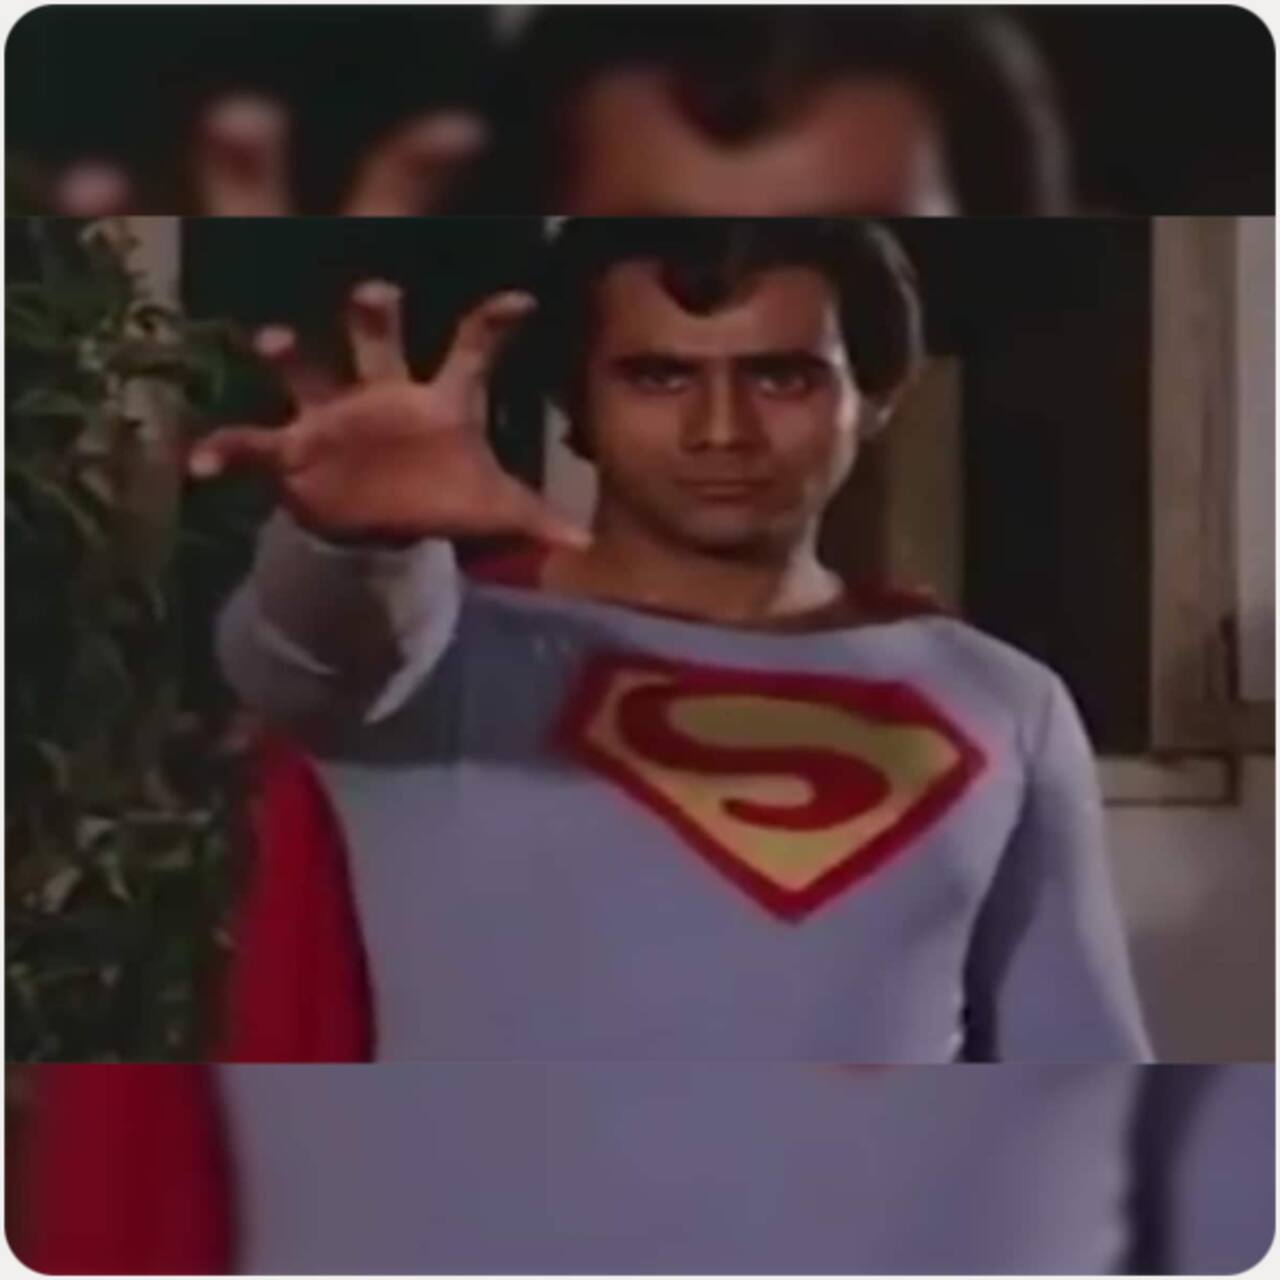 सुपरमैन (Superman)